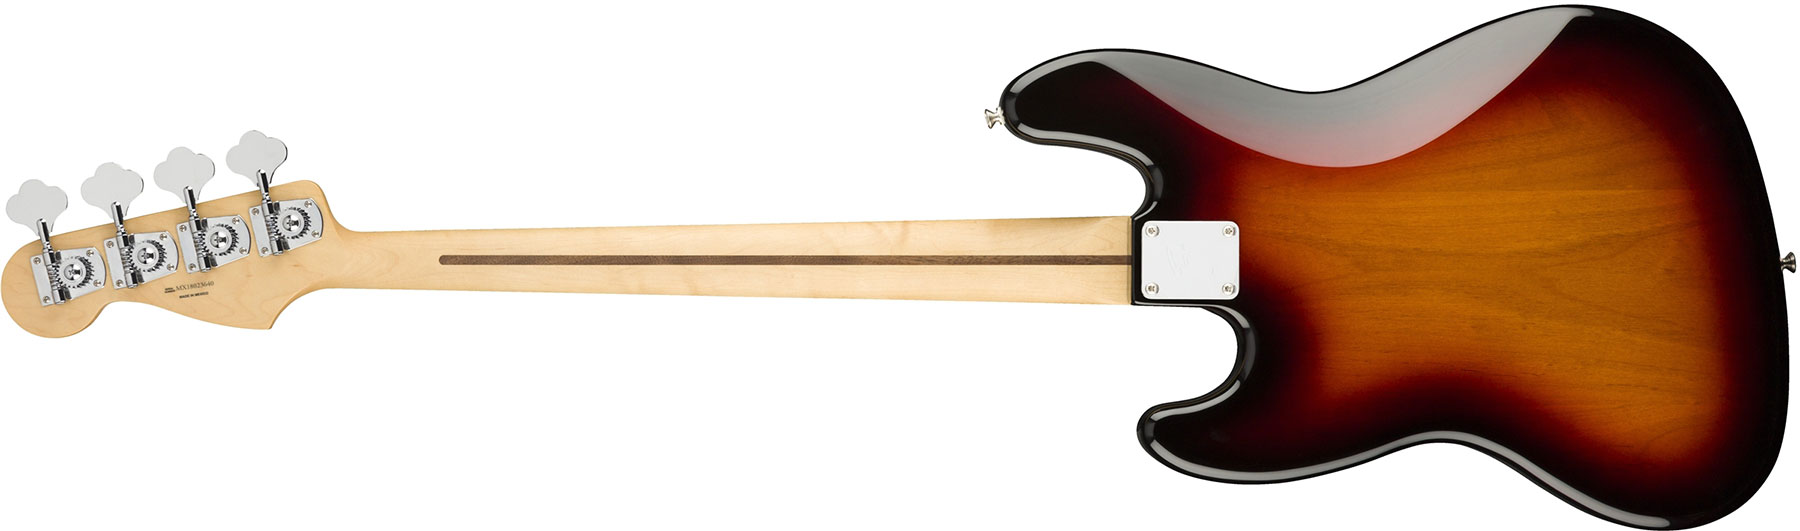 Fender Jazz Bass Player Mex Pf - 3-color Sunburst - Solid body electric bass - Variation 1